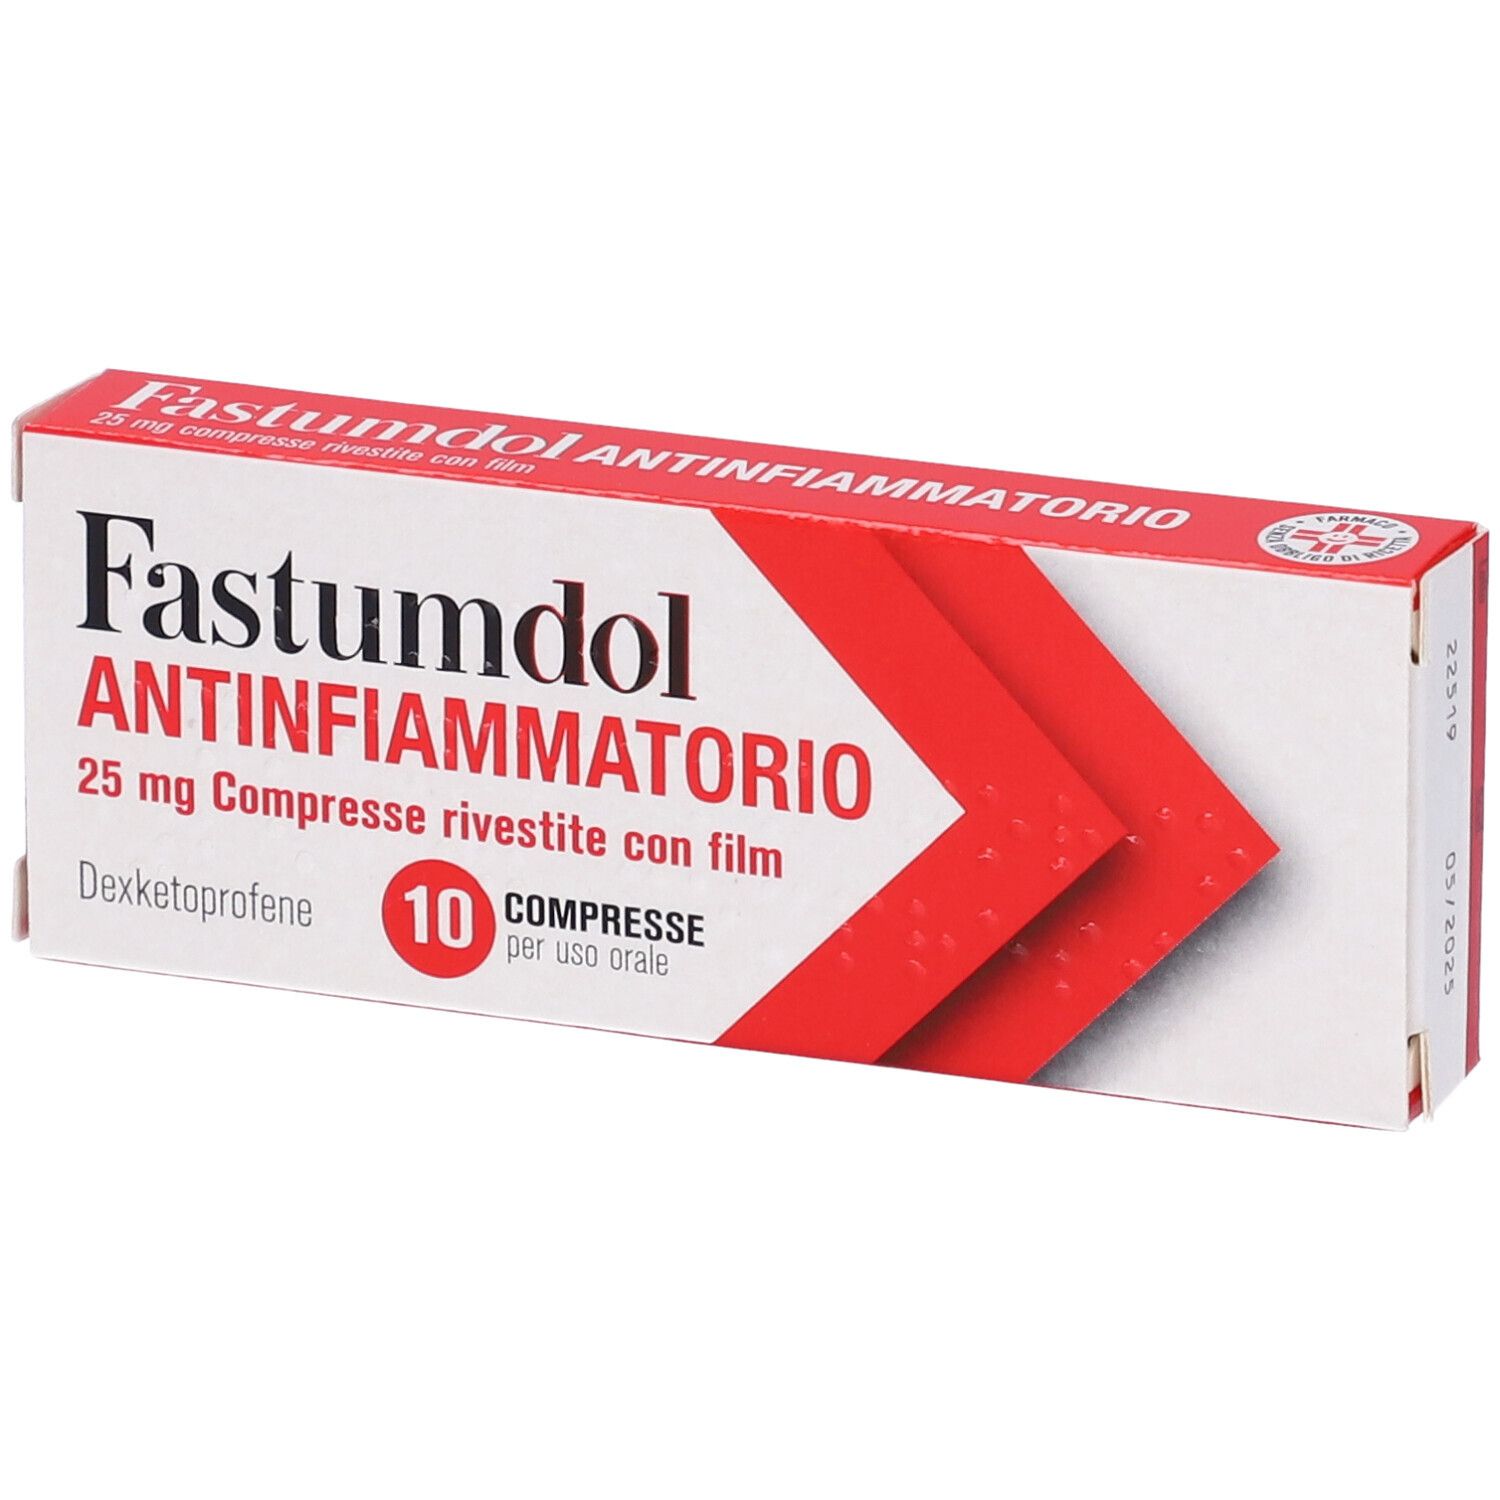 Image of Fastumdol Antinfiammatorio